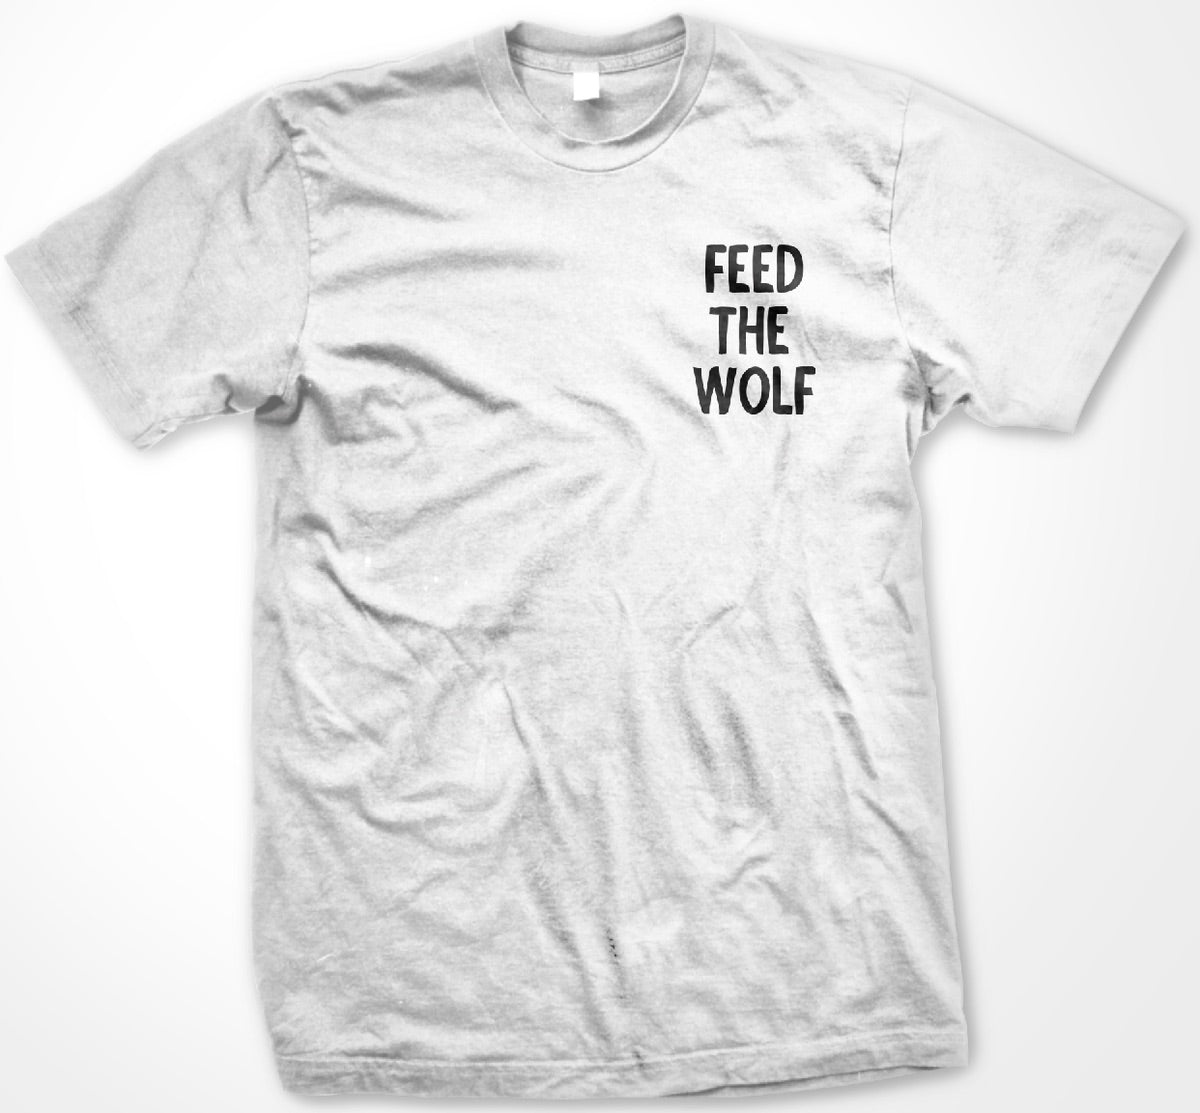 FEED THE WOLF TEE